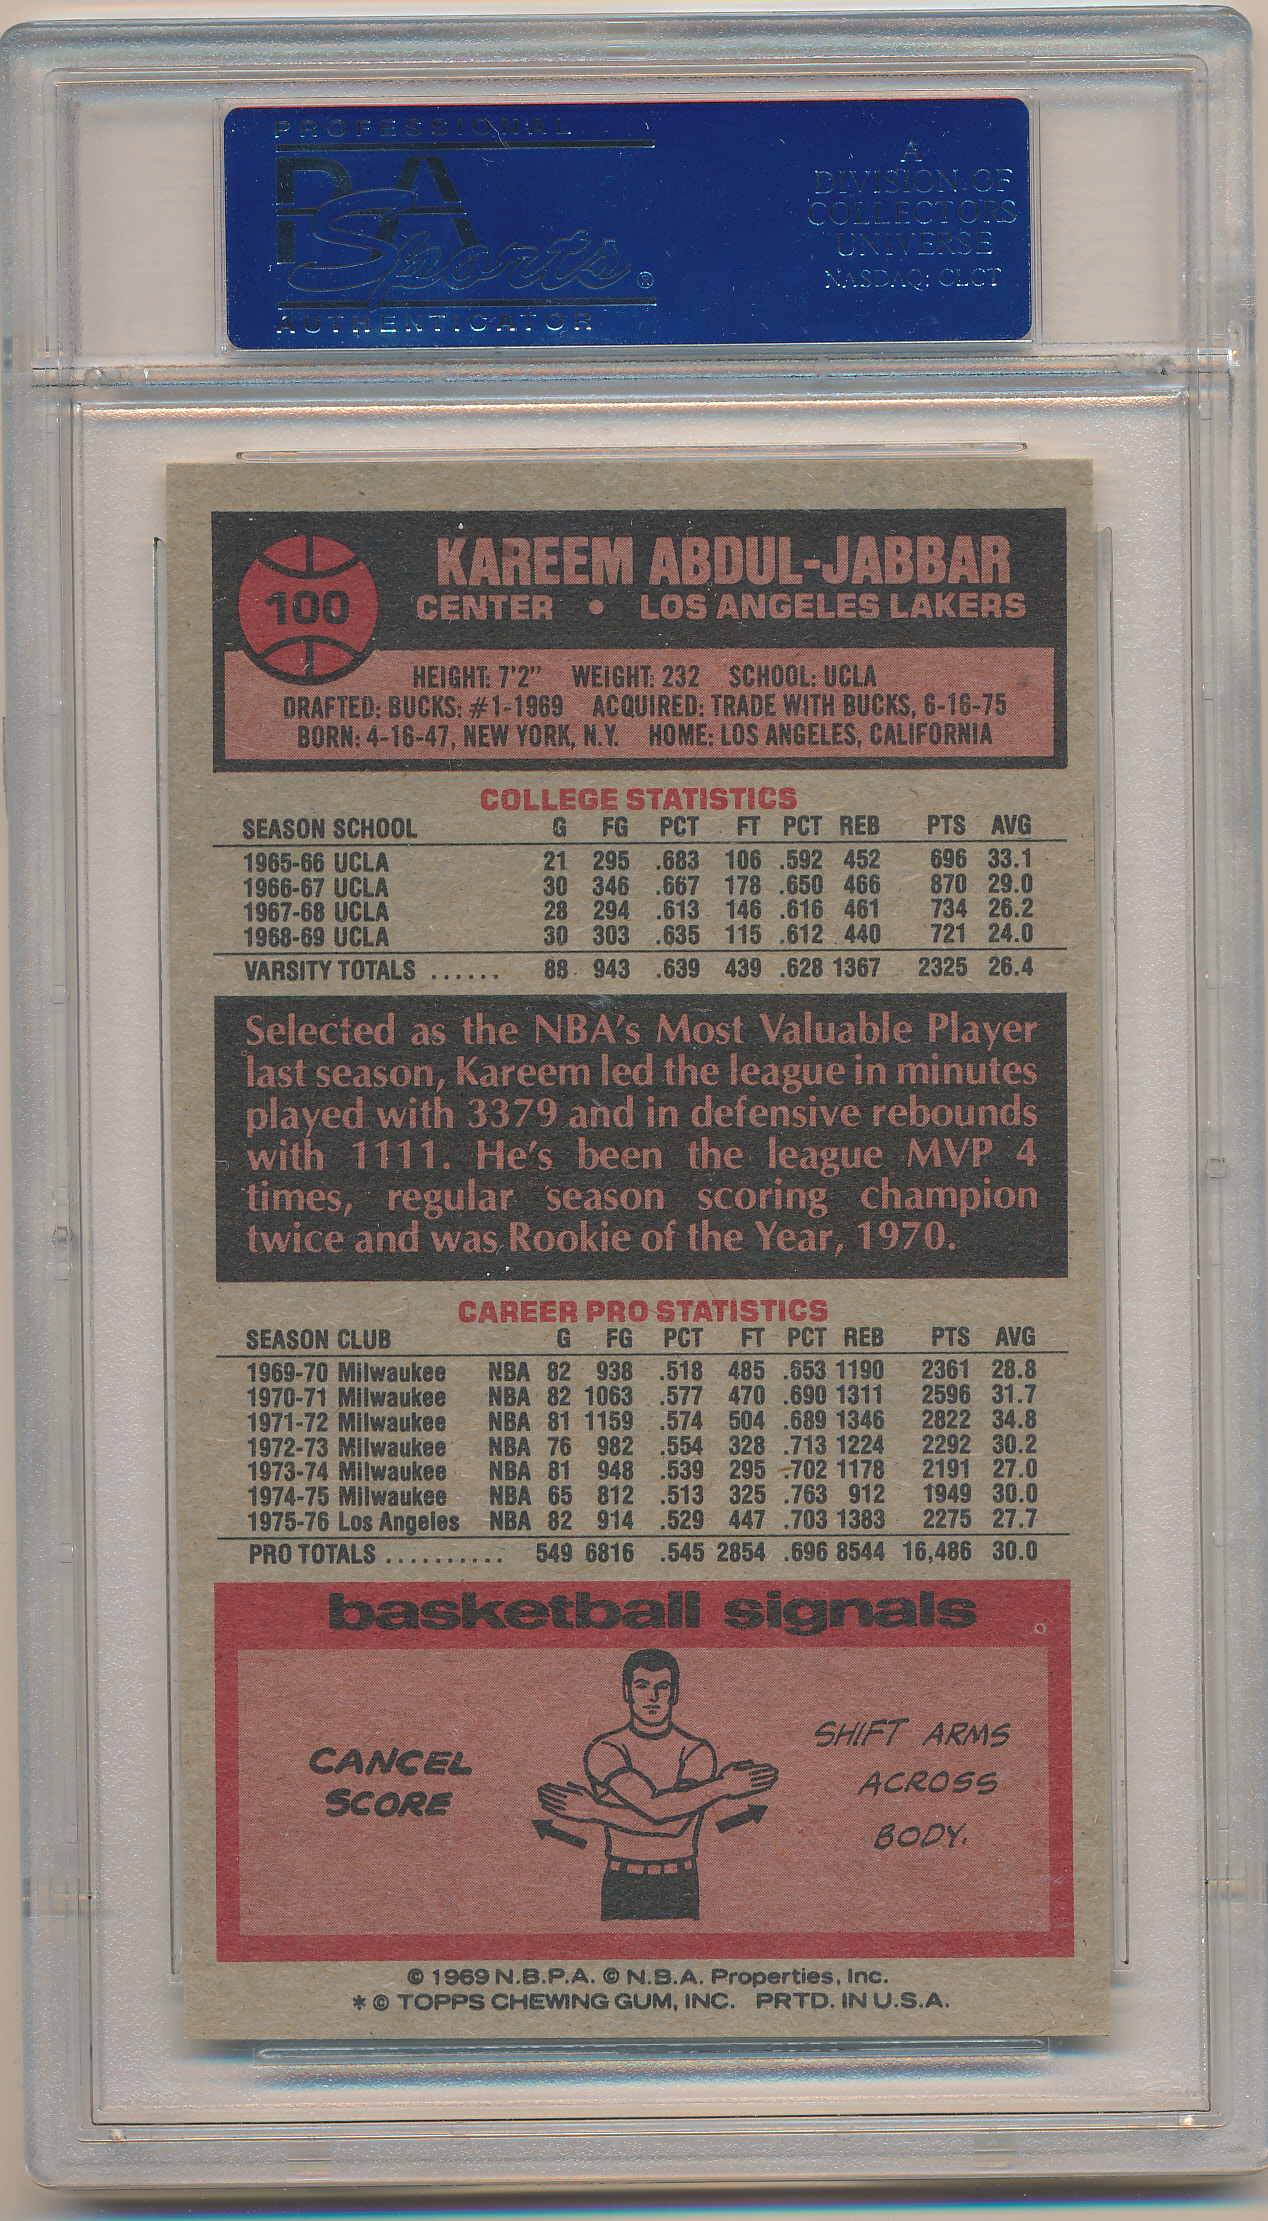 1976 Topps #100 Kareem Abdul-Jabbar PSA 7 NM Z27147 back image